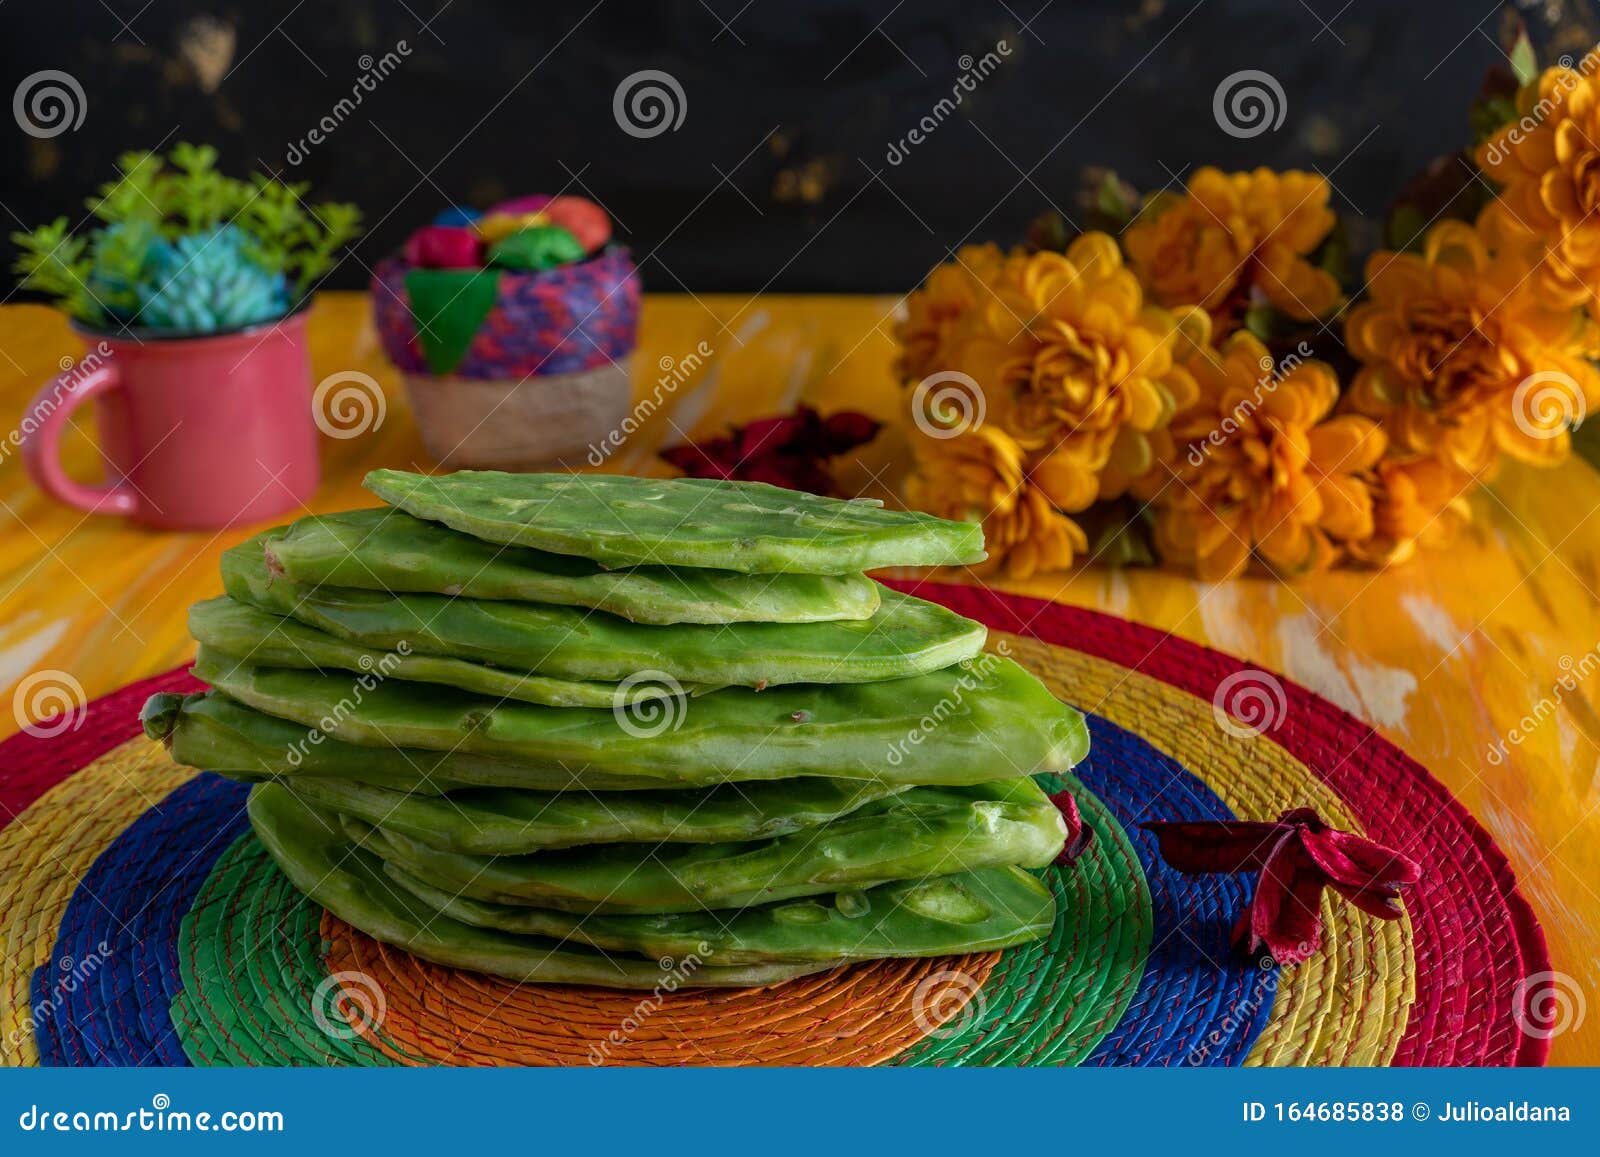 nopales mexican edible cactus, mexico kitchen scene.